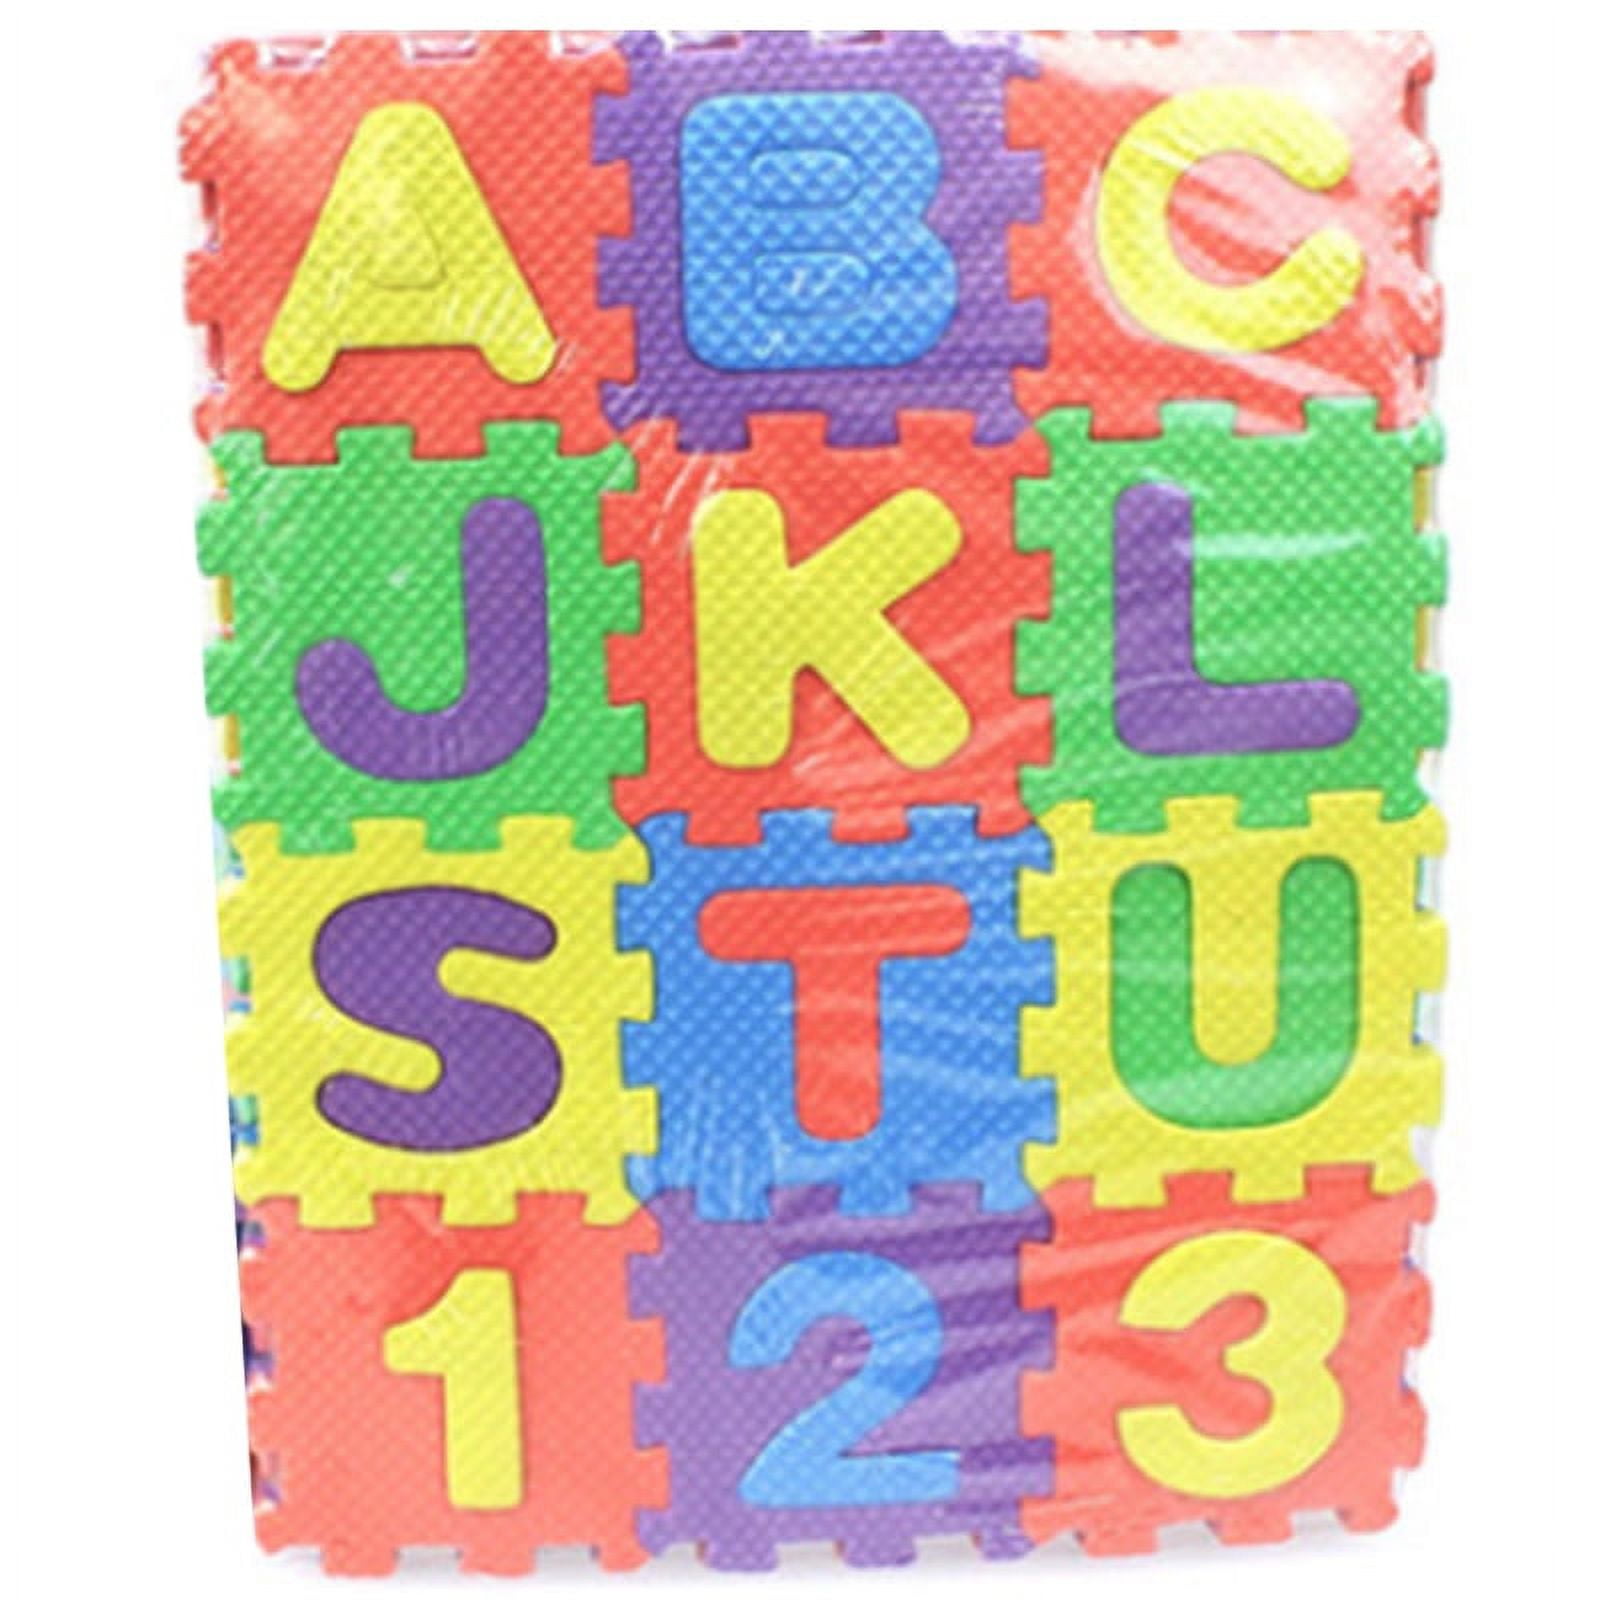 KC Cubs Soft & Safe Non-Toxic Children’s Interlocking Multicolor Exercise Puzzle Educational ABC Alphabet Eva Play Foam Mat for Kid’s Floor & Baby